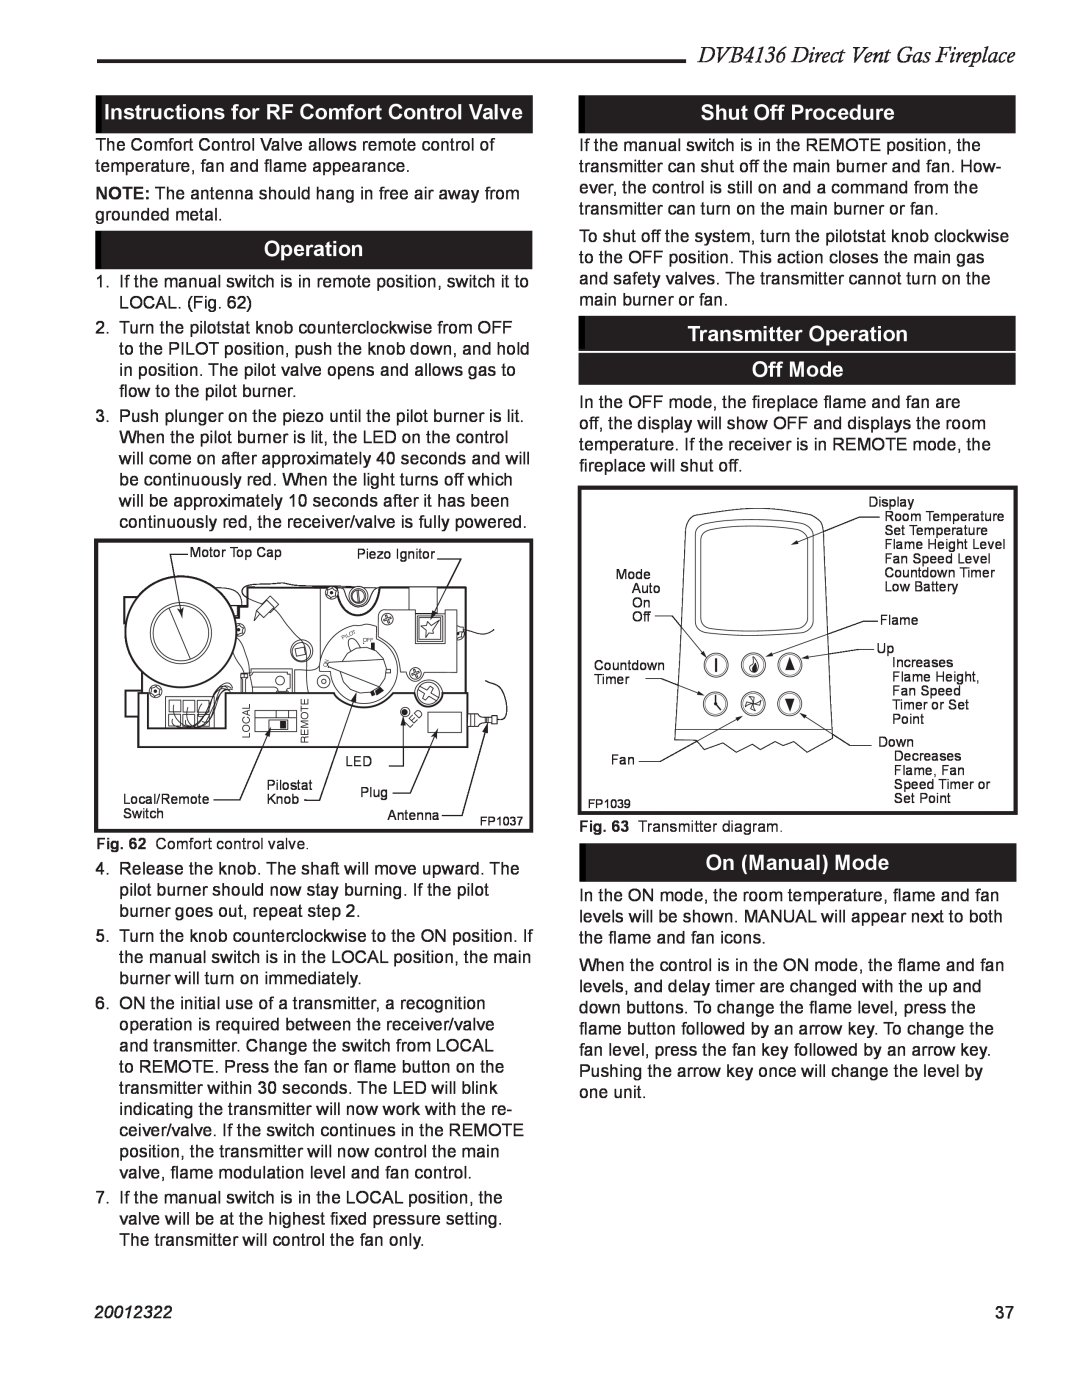 Majestic Appliances DVB4136 manual Instructions for RF Comfort Control Valve, Operation, Shut Off Procedure, On Manual Mode 